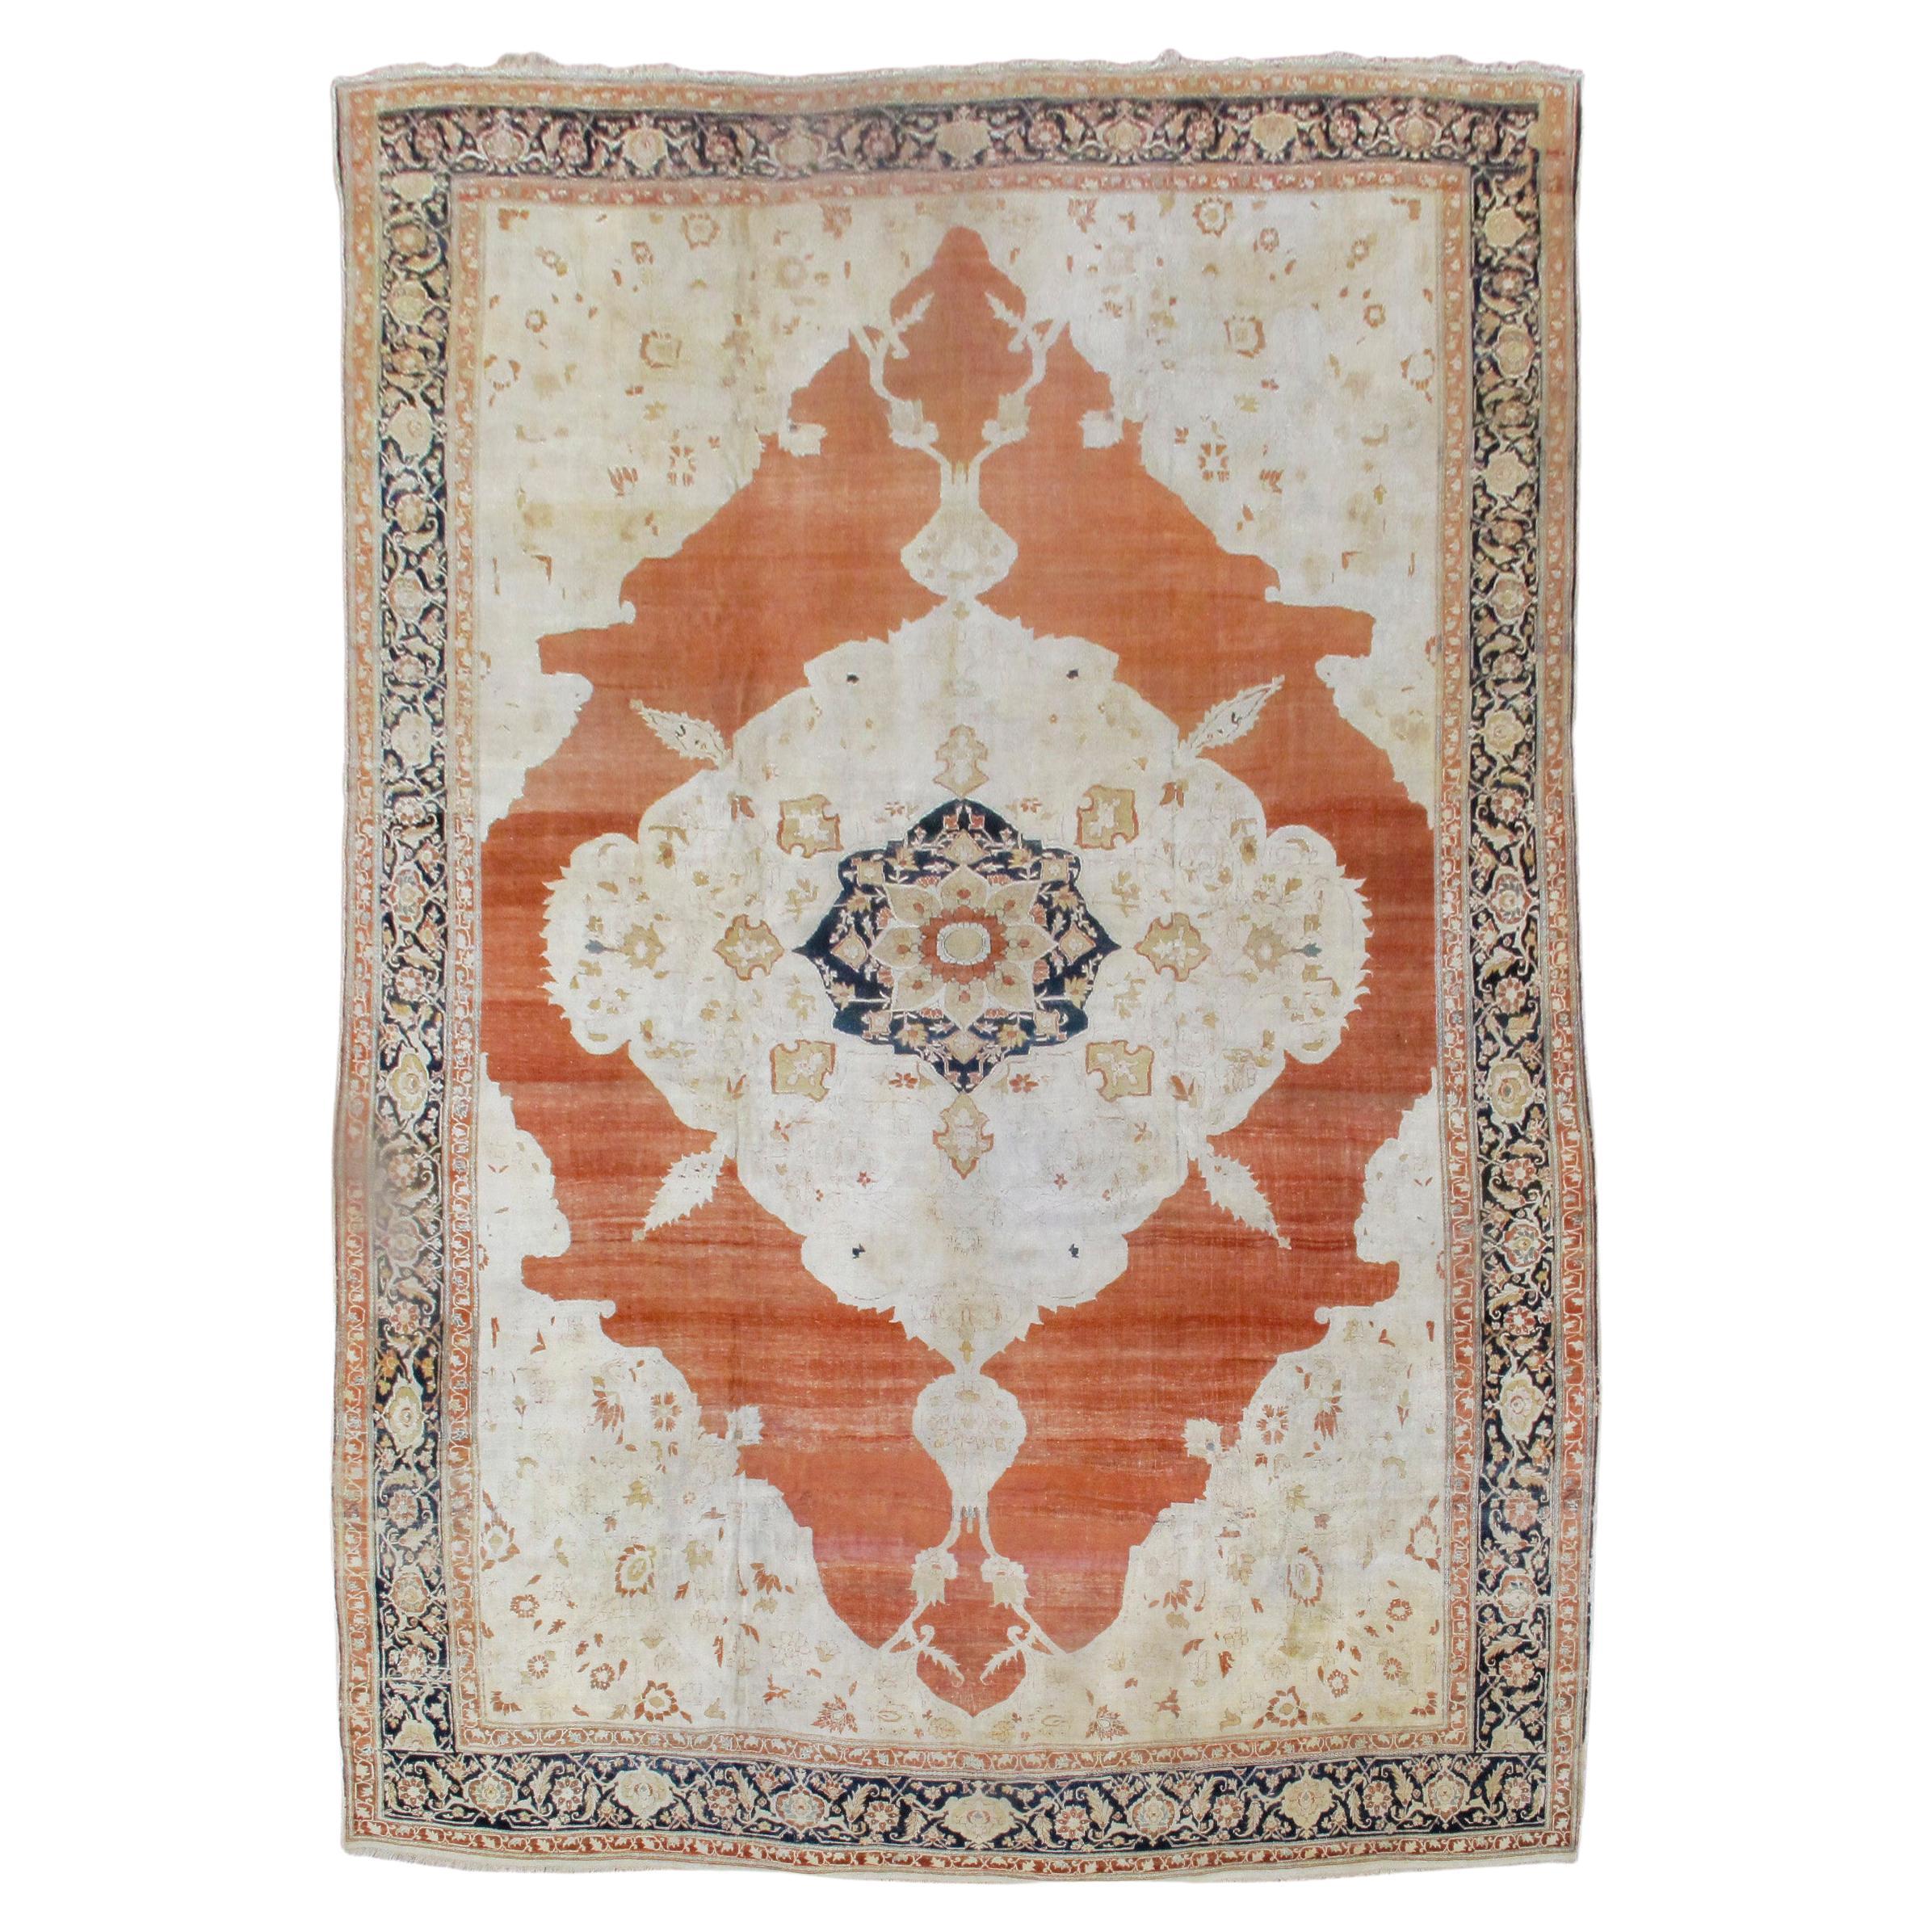 Large Antique Persian Tabriz Carpet, Mid-19th Century